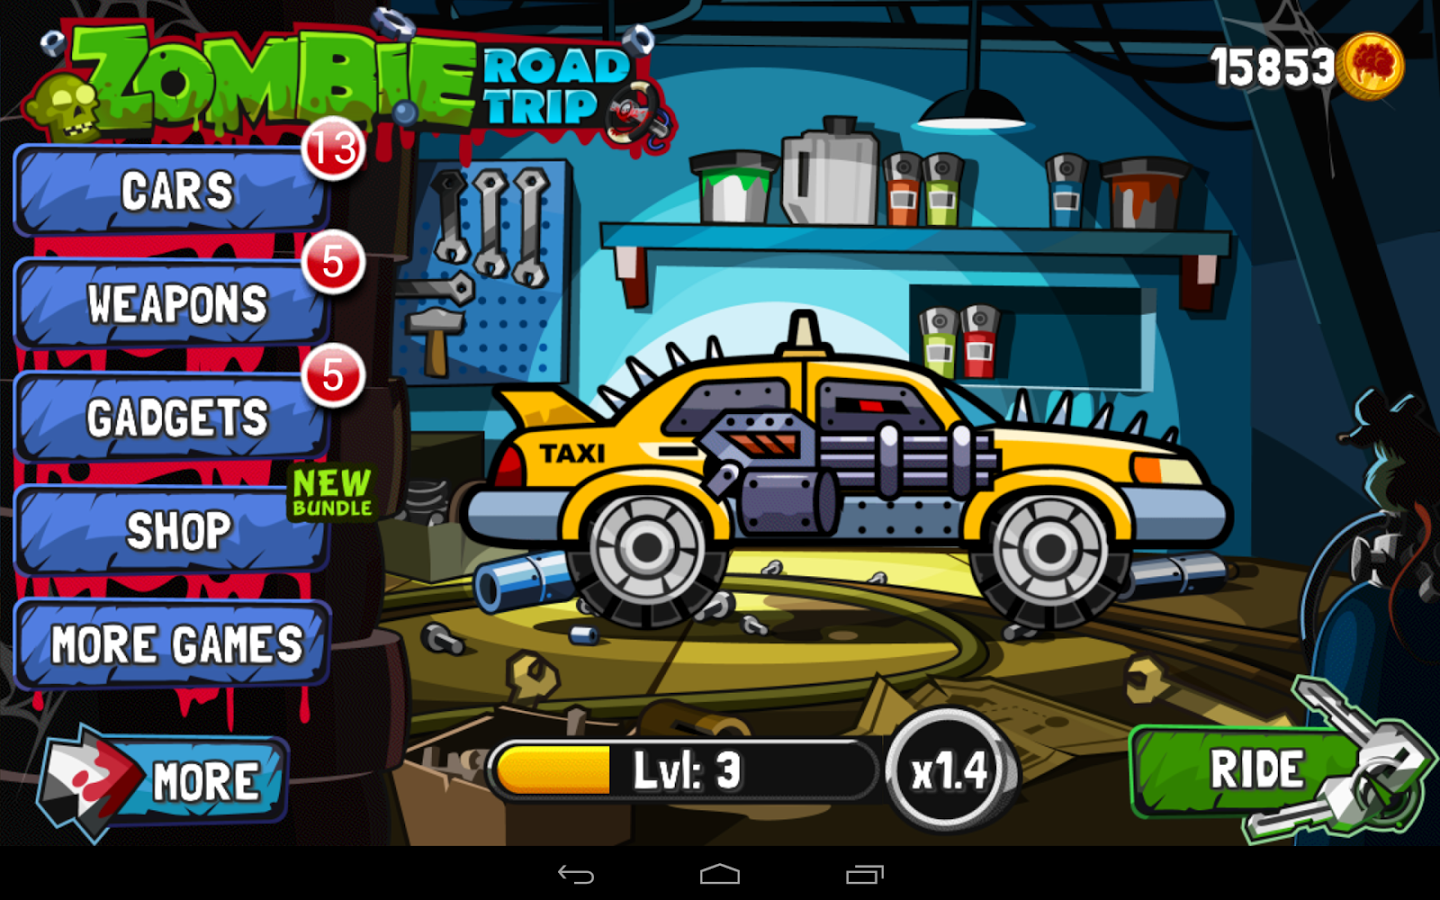 Скачать Zombie Road Trip 3.23 для Android - 1440 x 900 png 1097kB